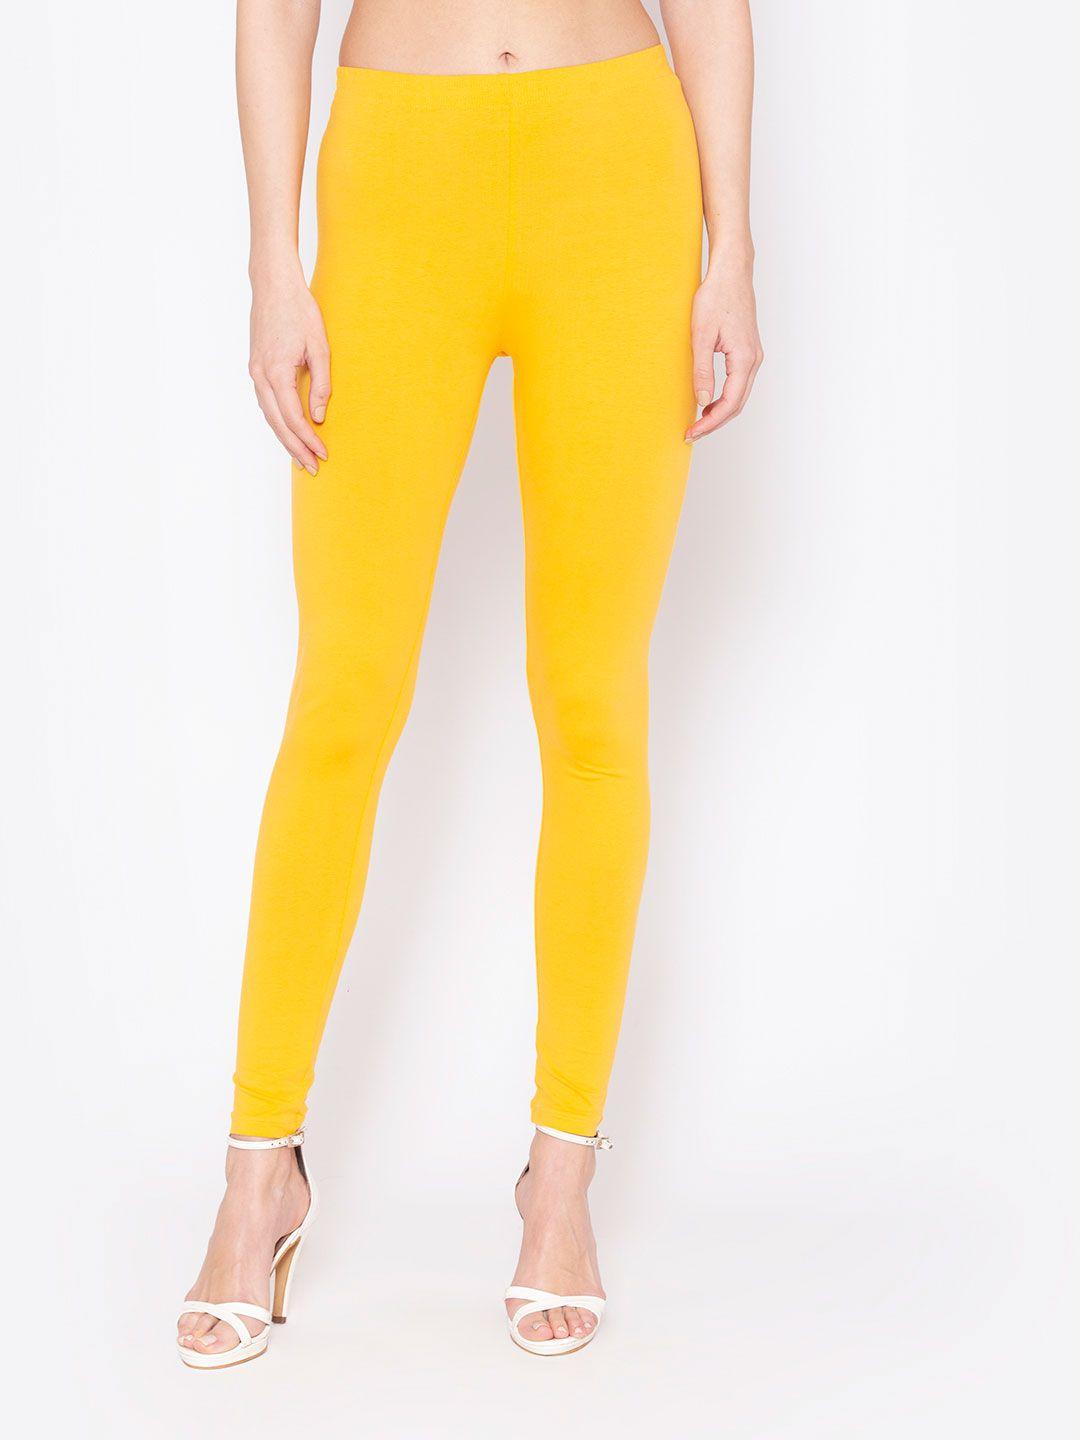 groversons paris beauty women yellow solid cotton ankle-length leggings